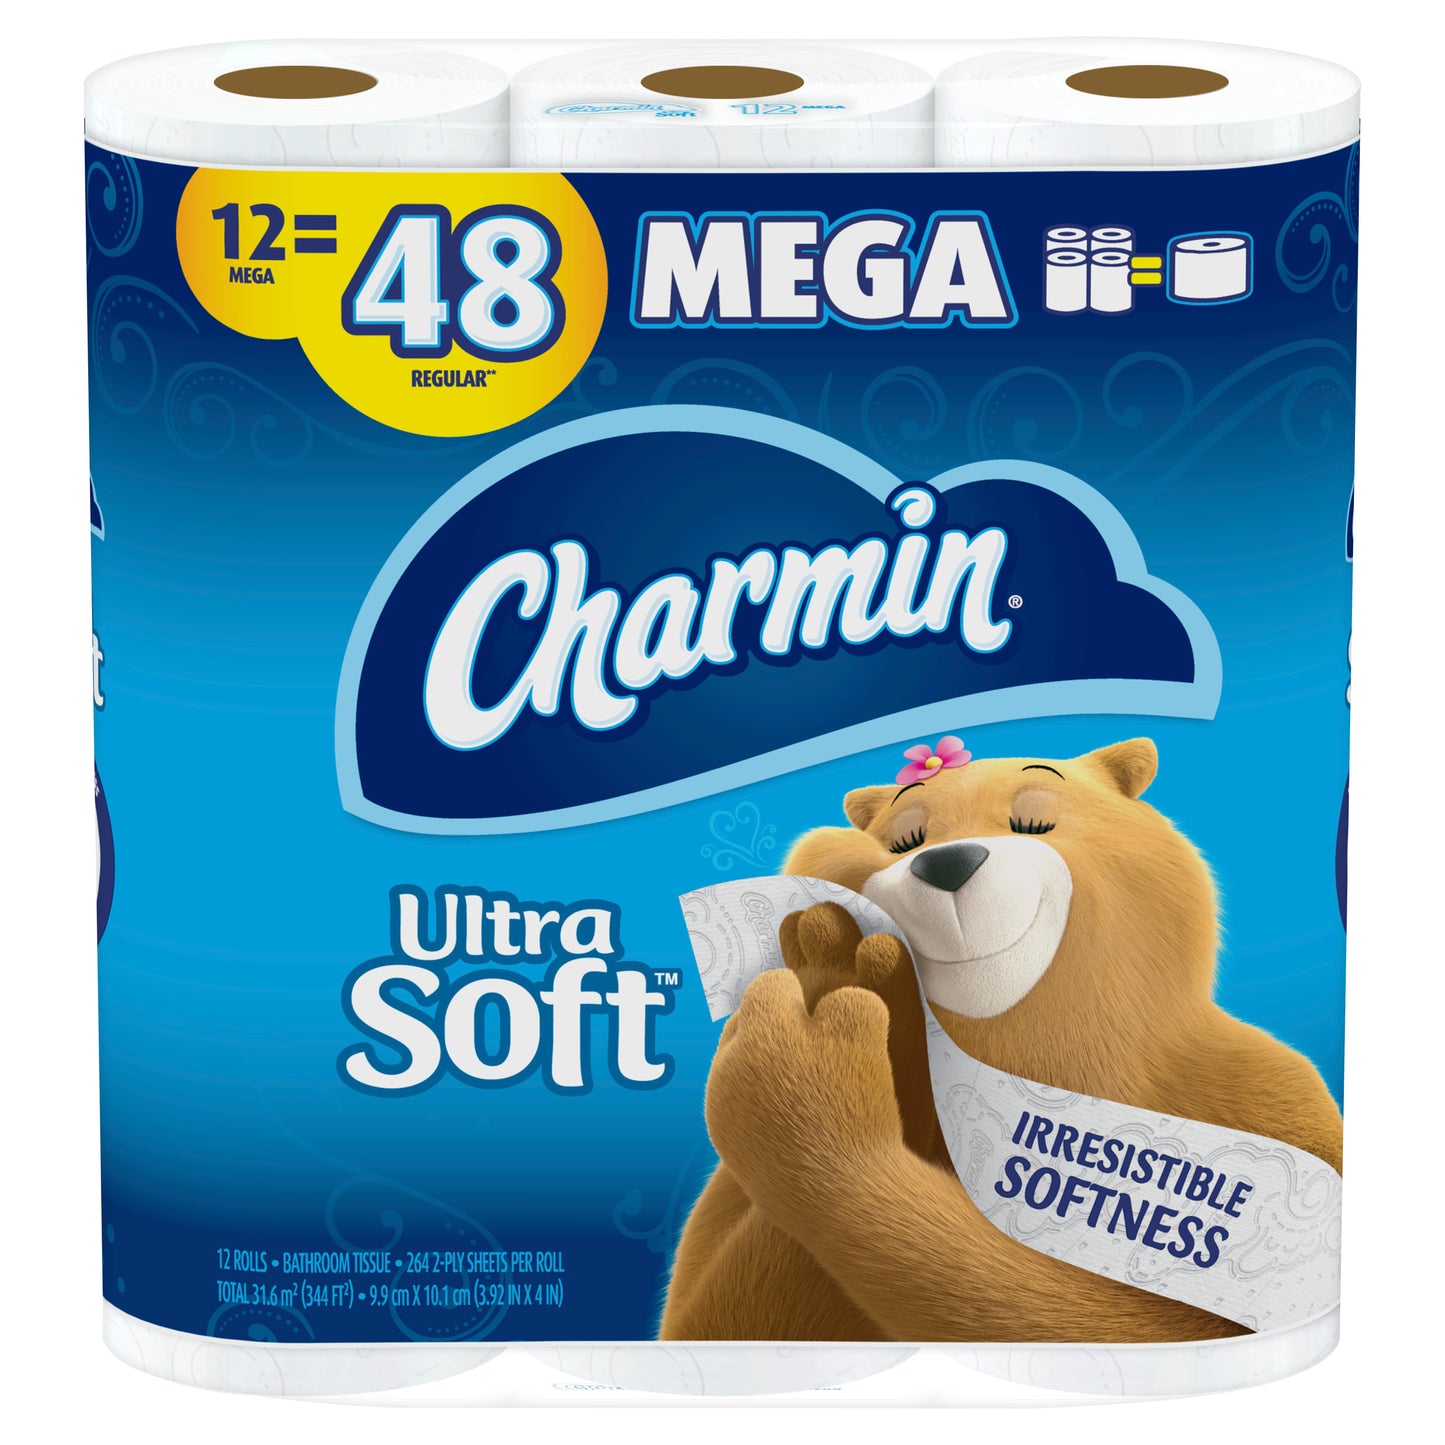 Charmin Ultra Soft Toilet Paper 12 = 48 Mega Rolls, 3168 Sheets